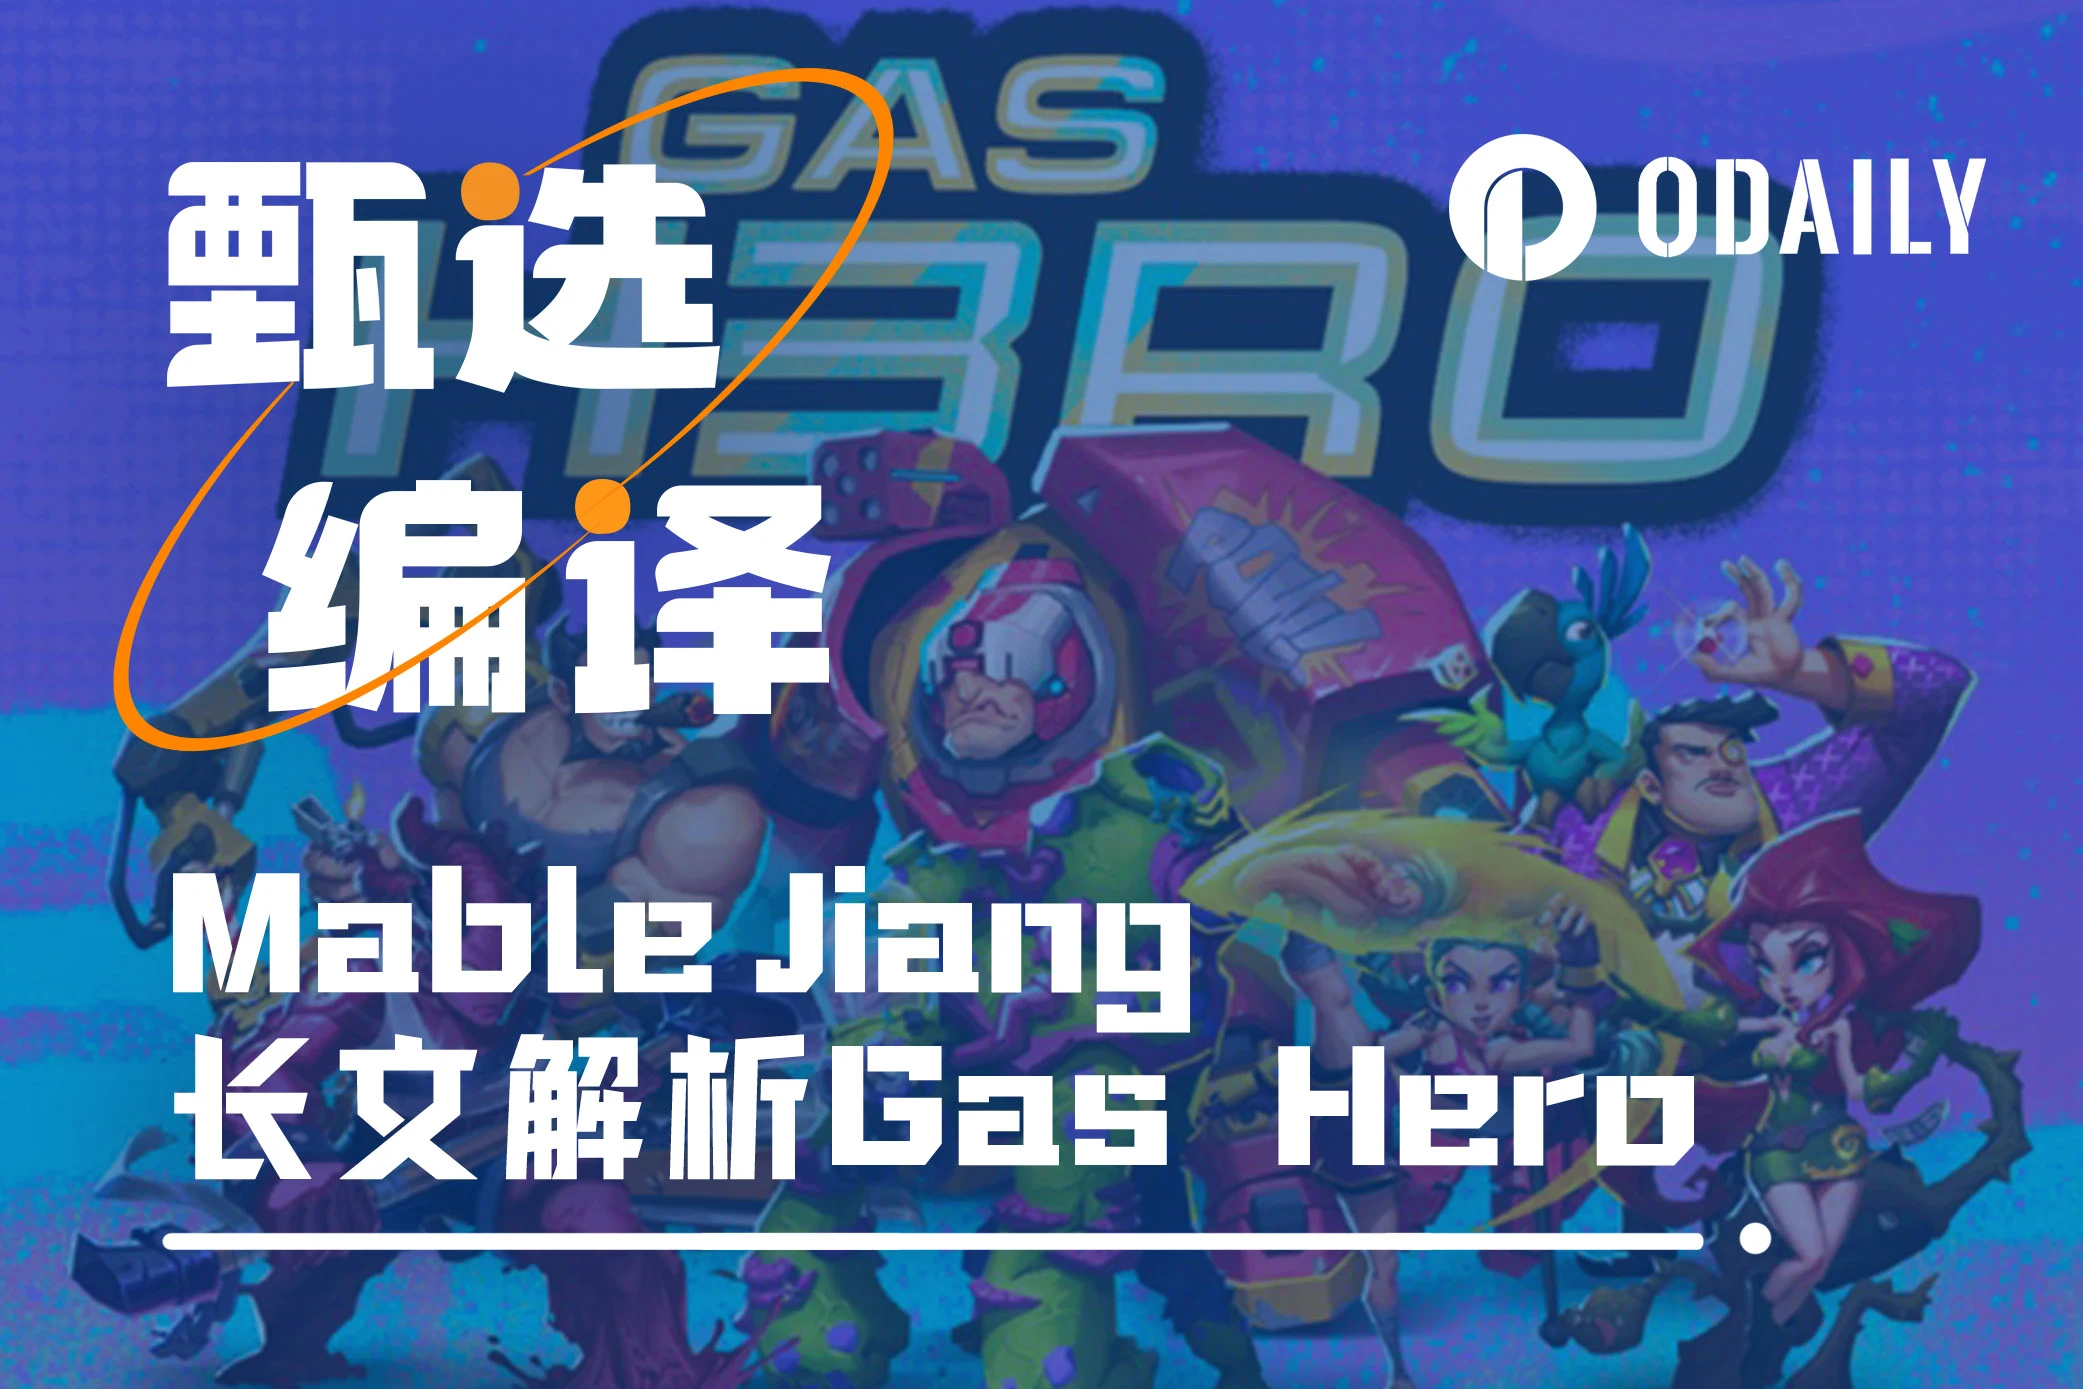 Mable Jiang：为什么Gas Hero将重新定义链游？